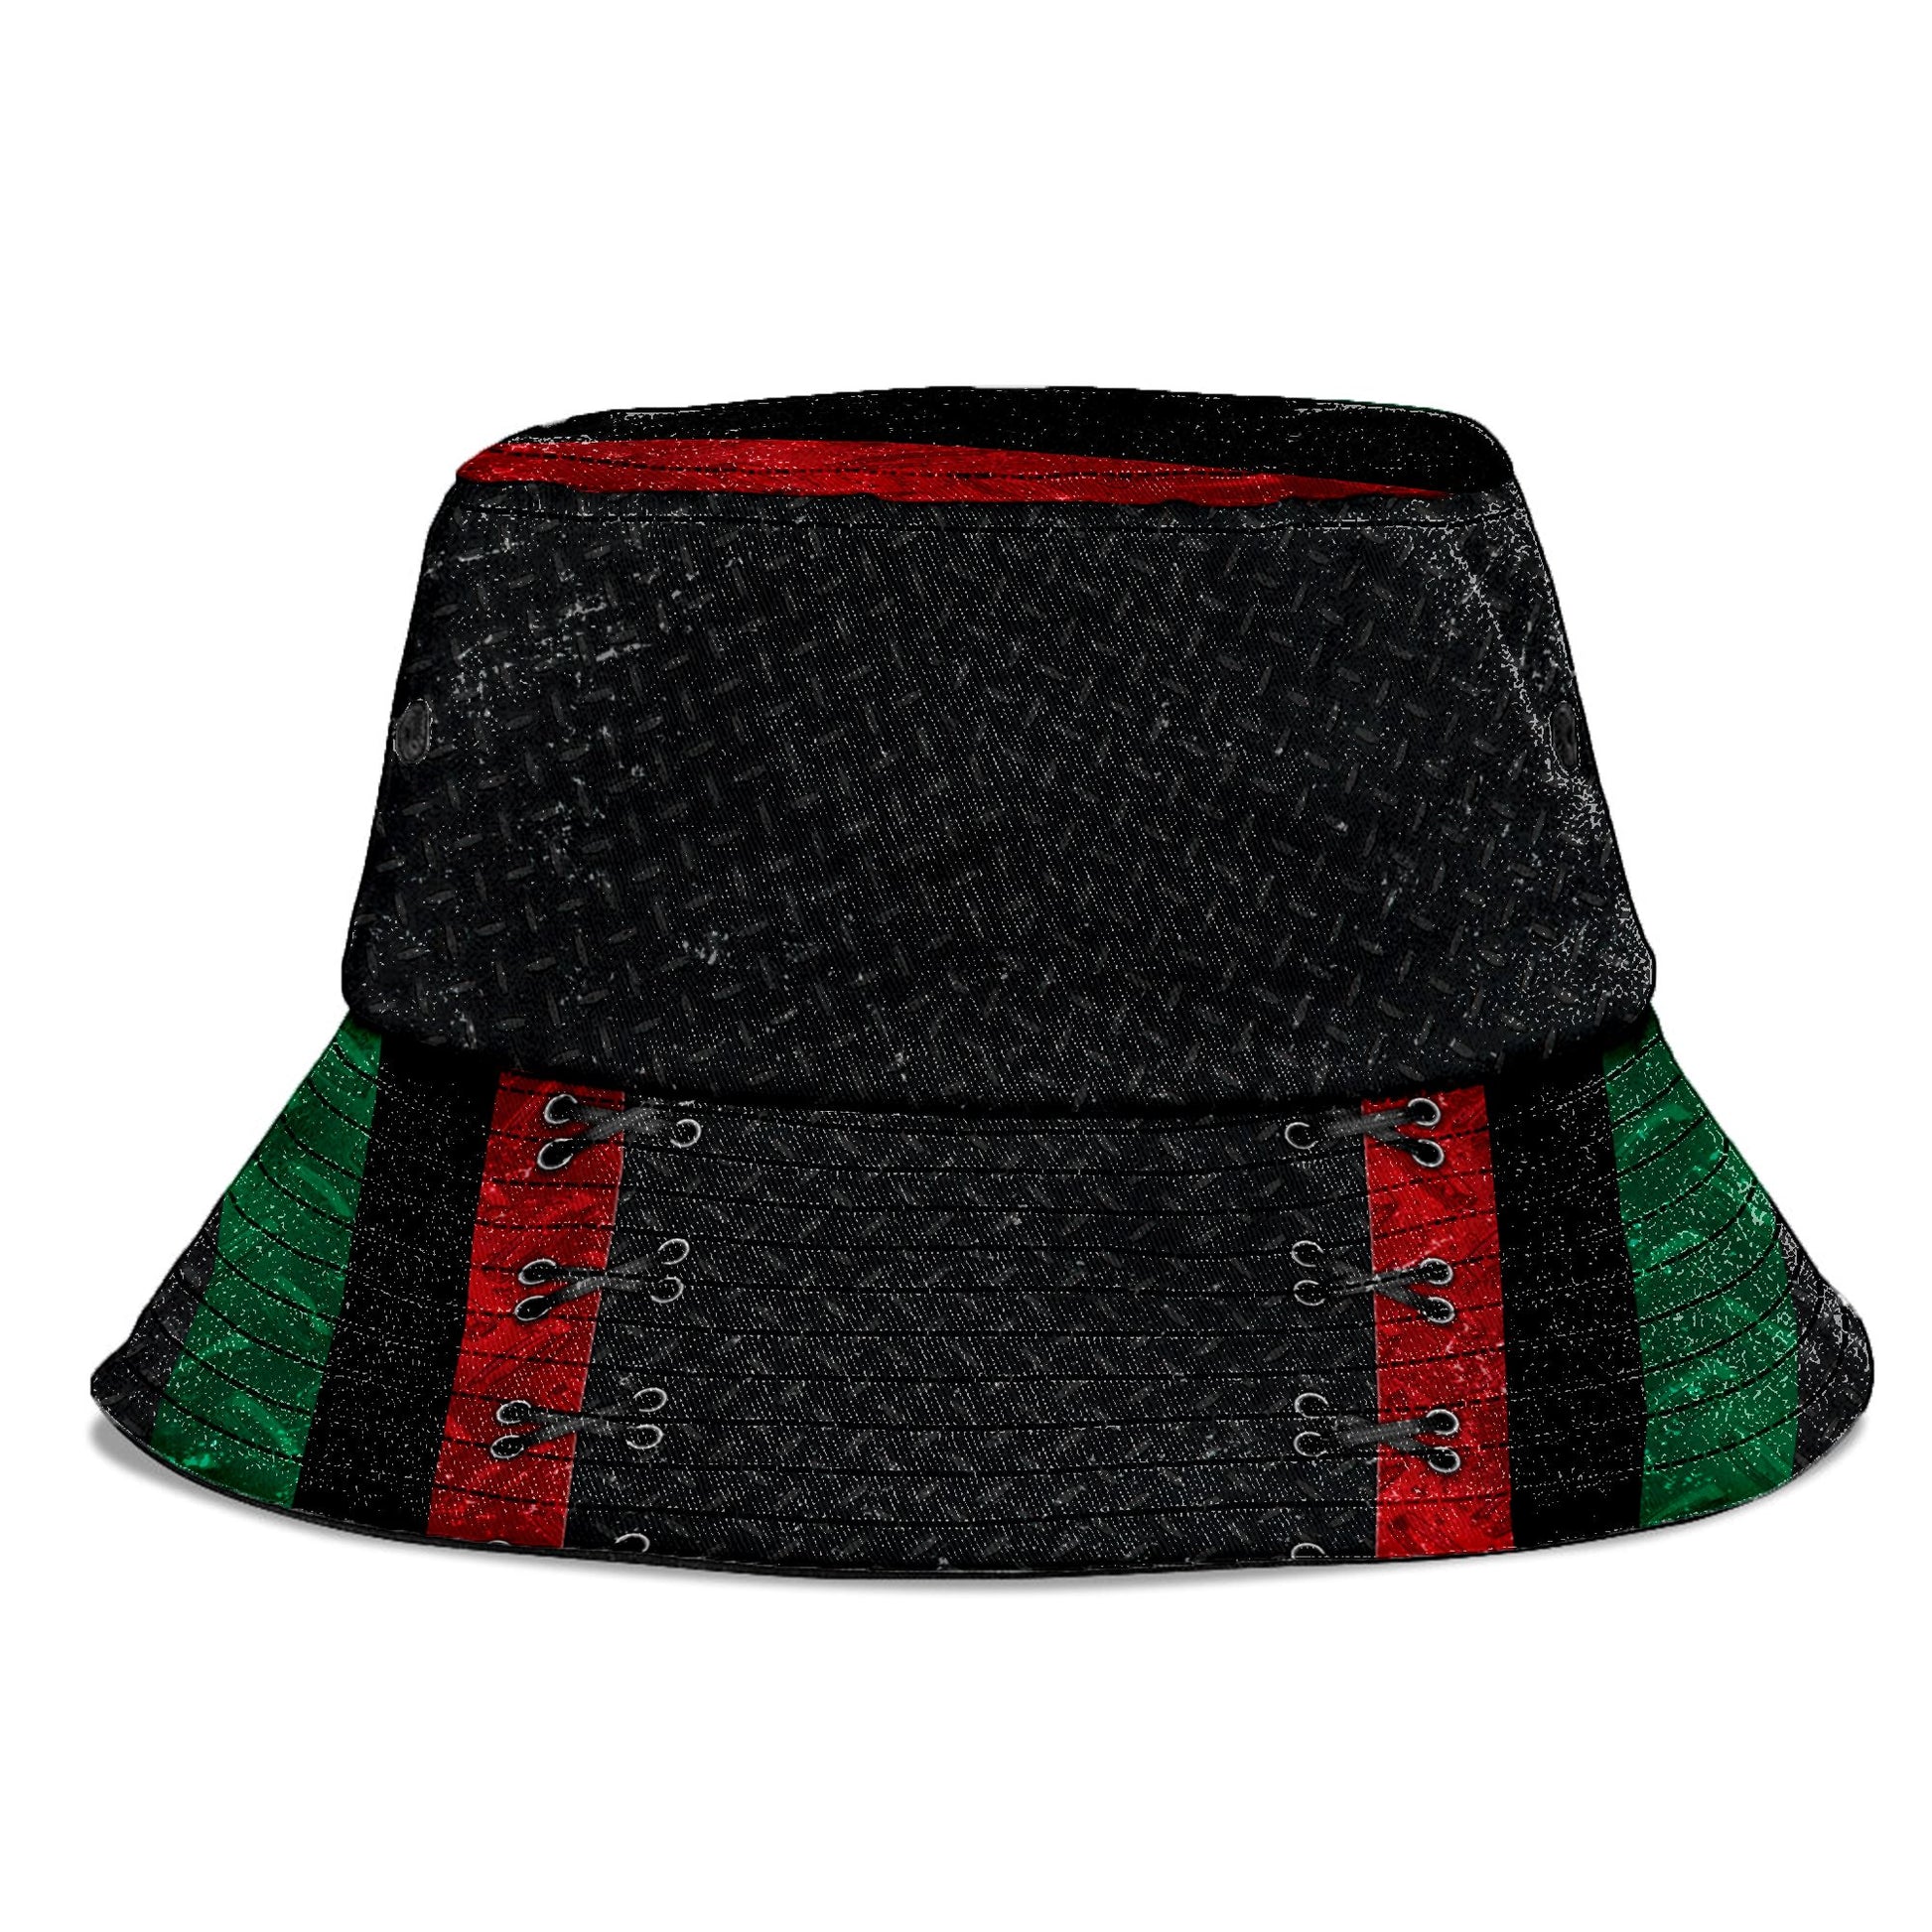 Black & Proud Bucket Hat Bucket Hat Tianci 